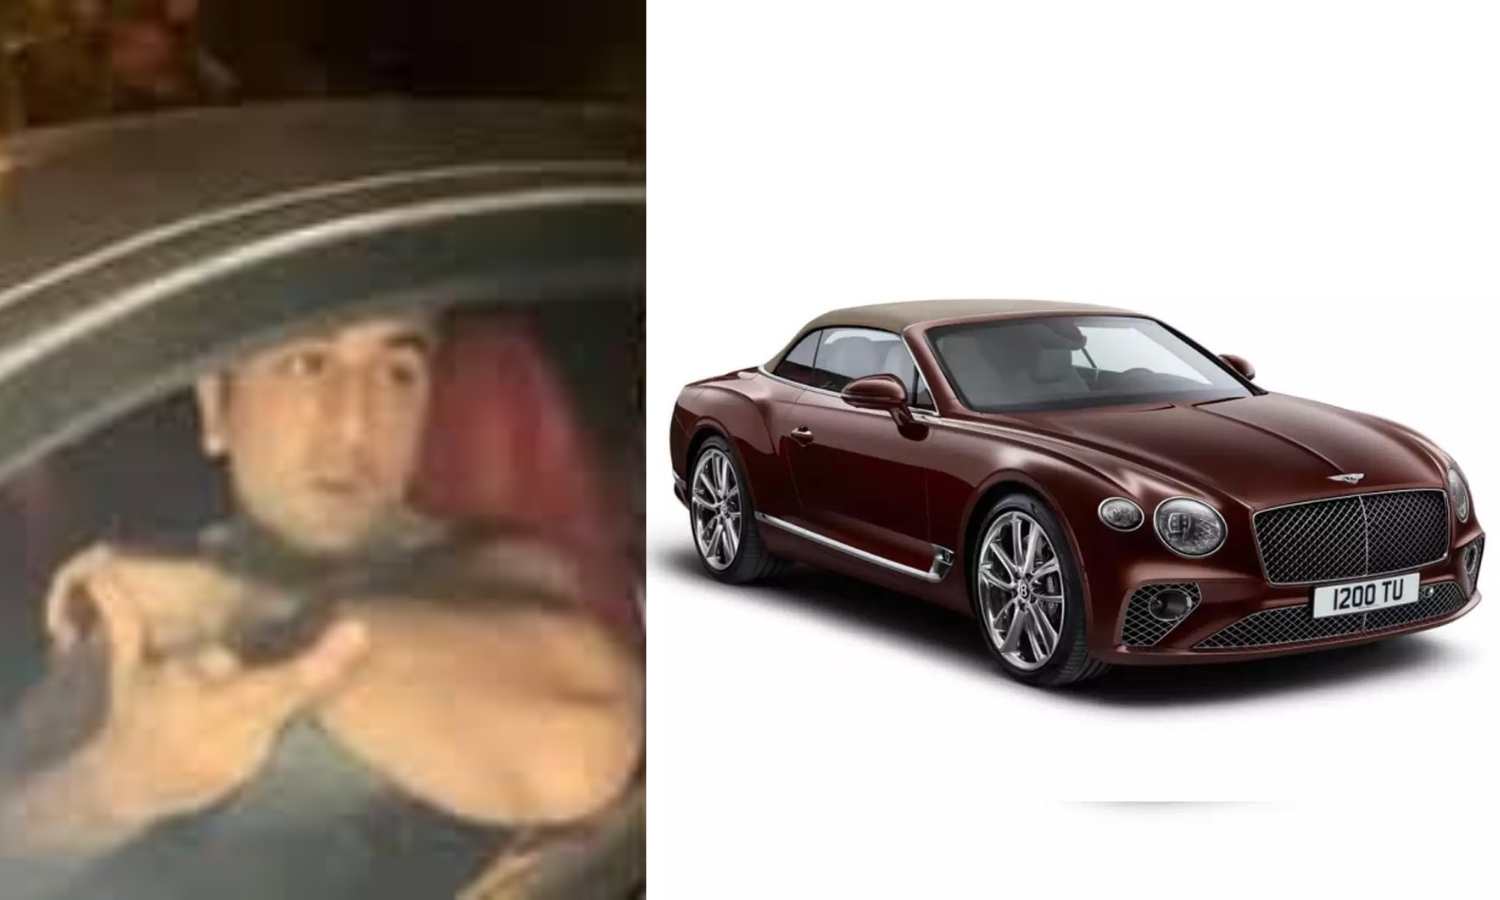 Video of Ranbir Kapoor's Anger at Paparazzi Chasing His ₹78 Crore Bentley Goes Viral"